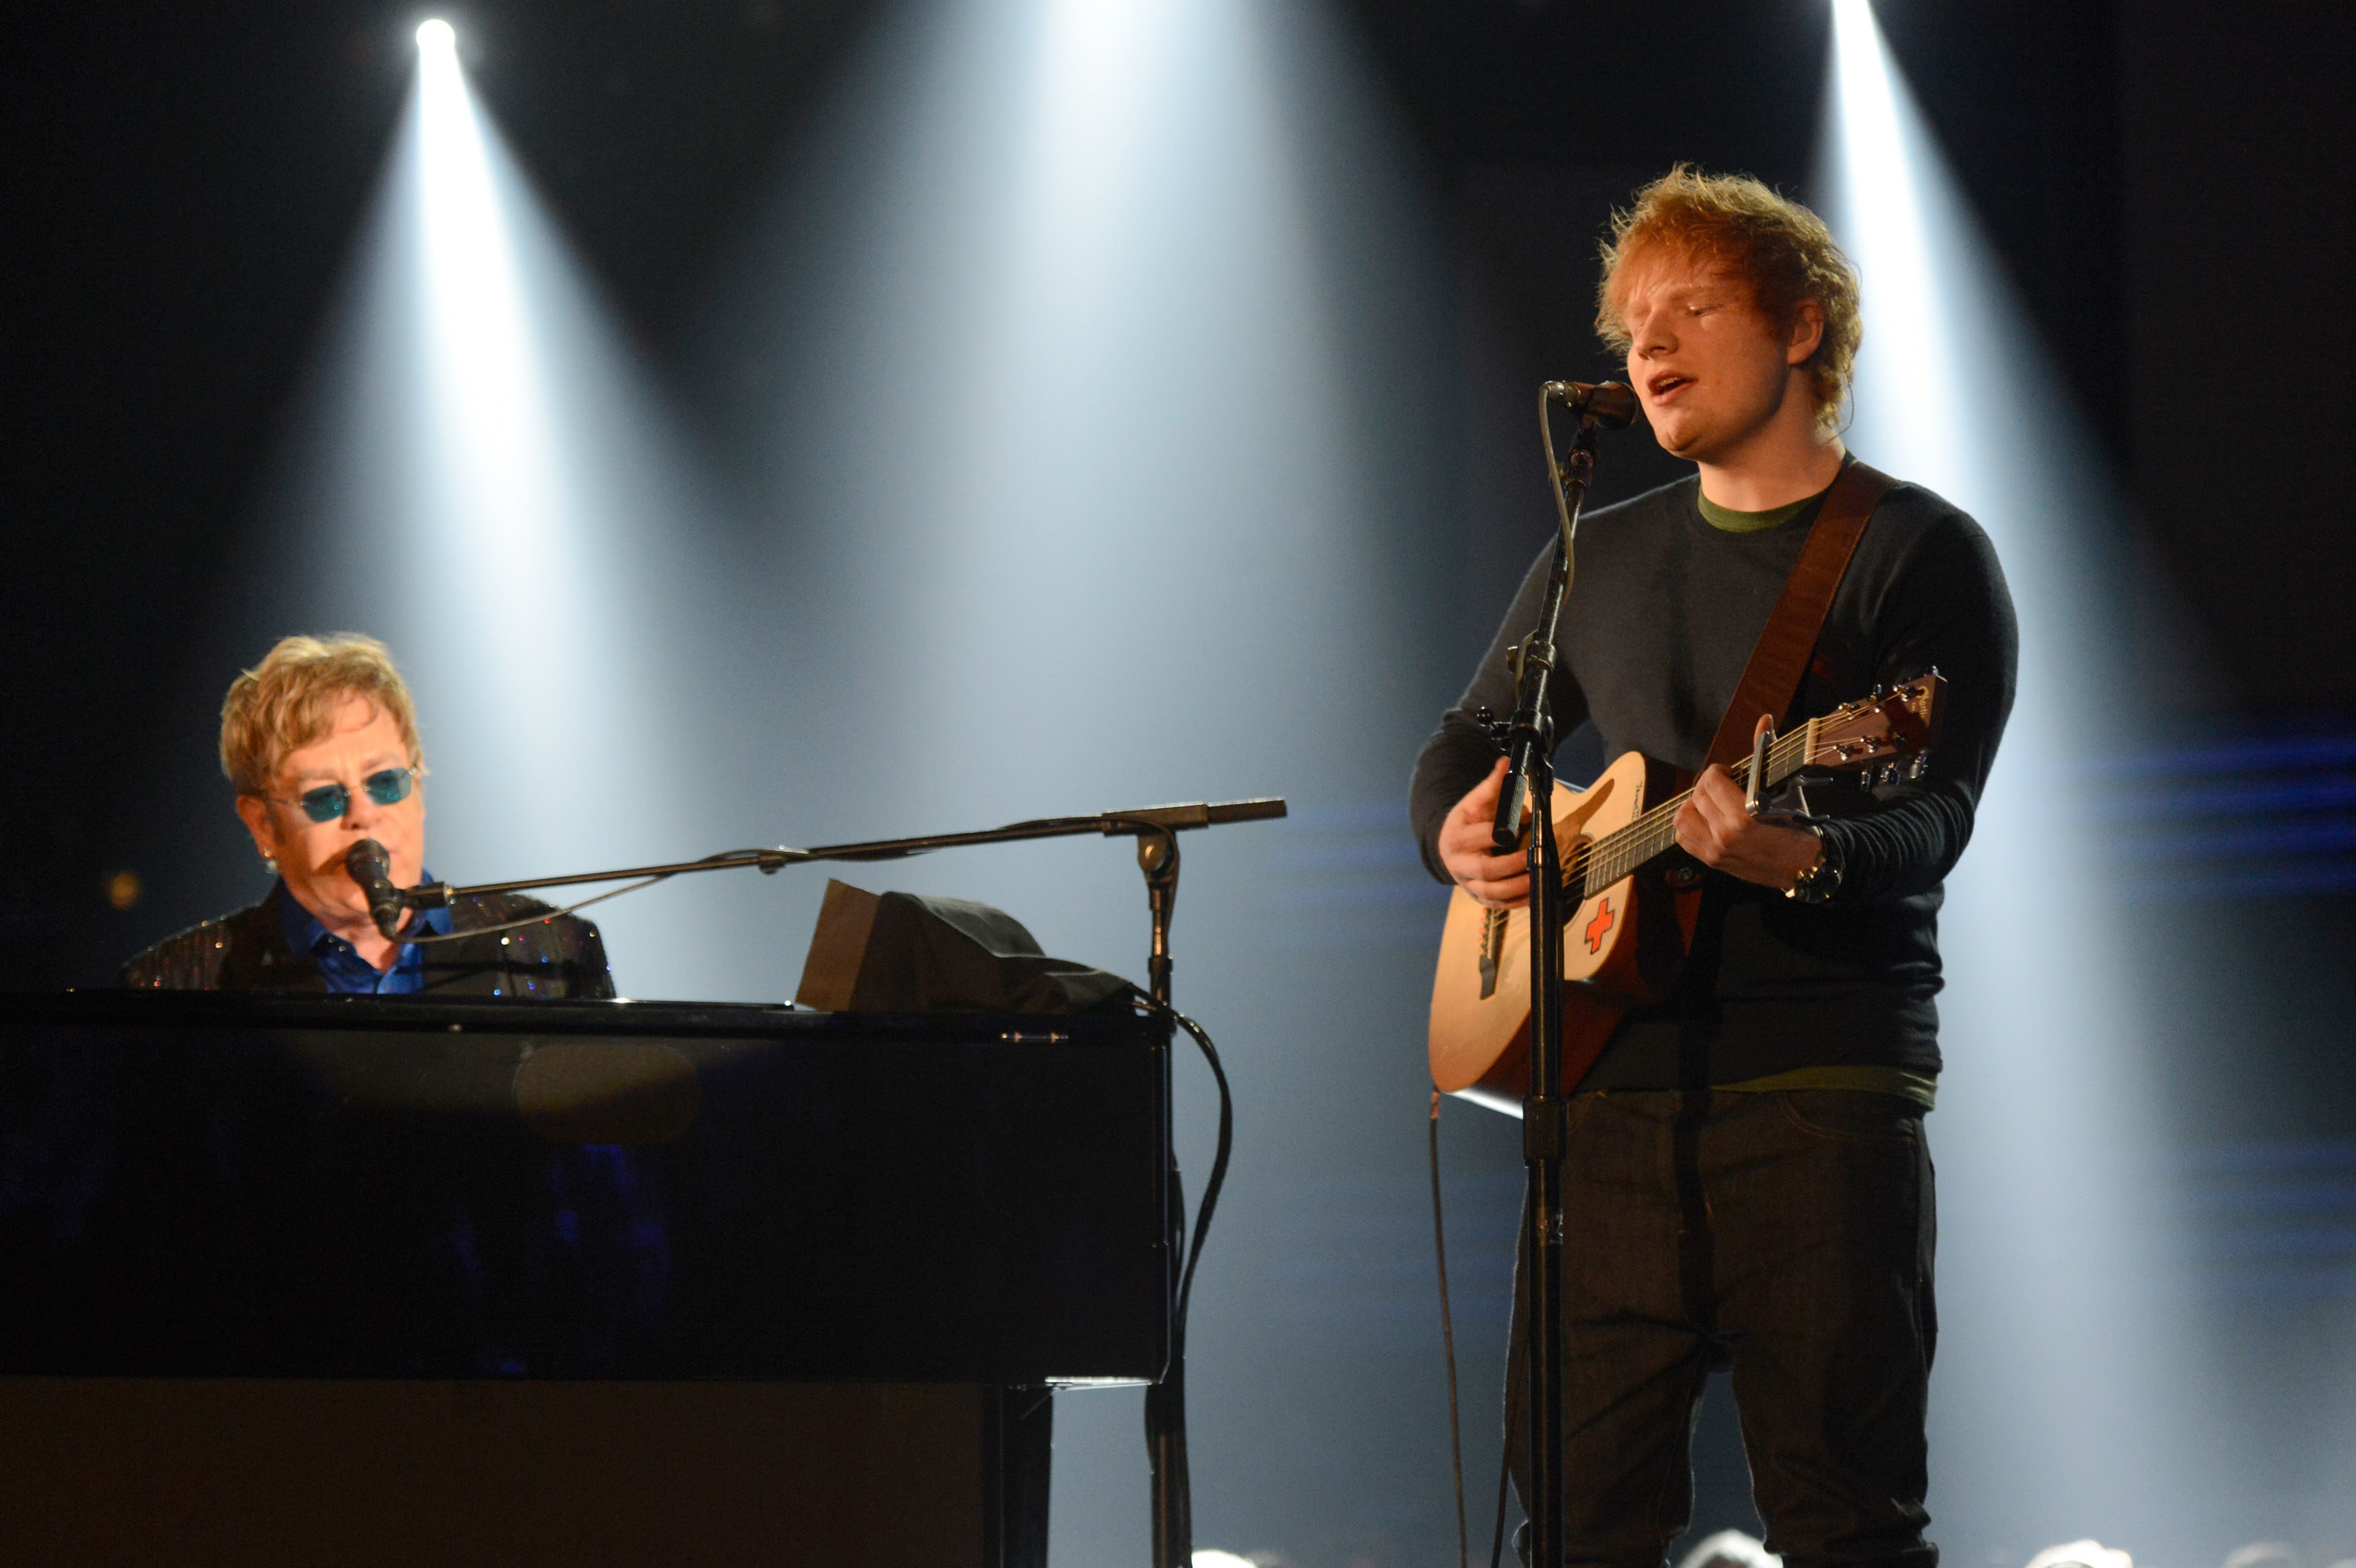 Sheeran sings with a guitar in hand as John plays the piano